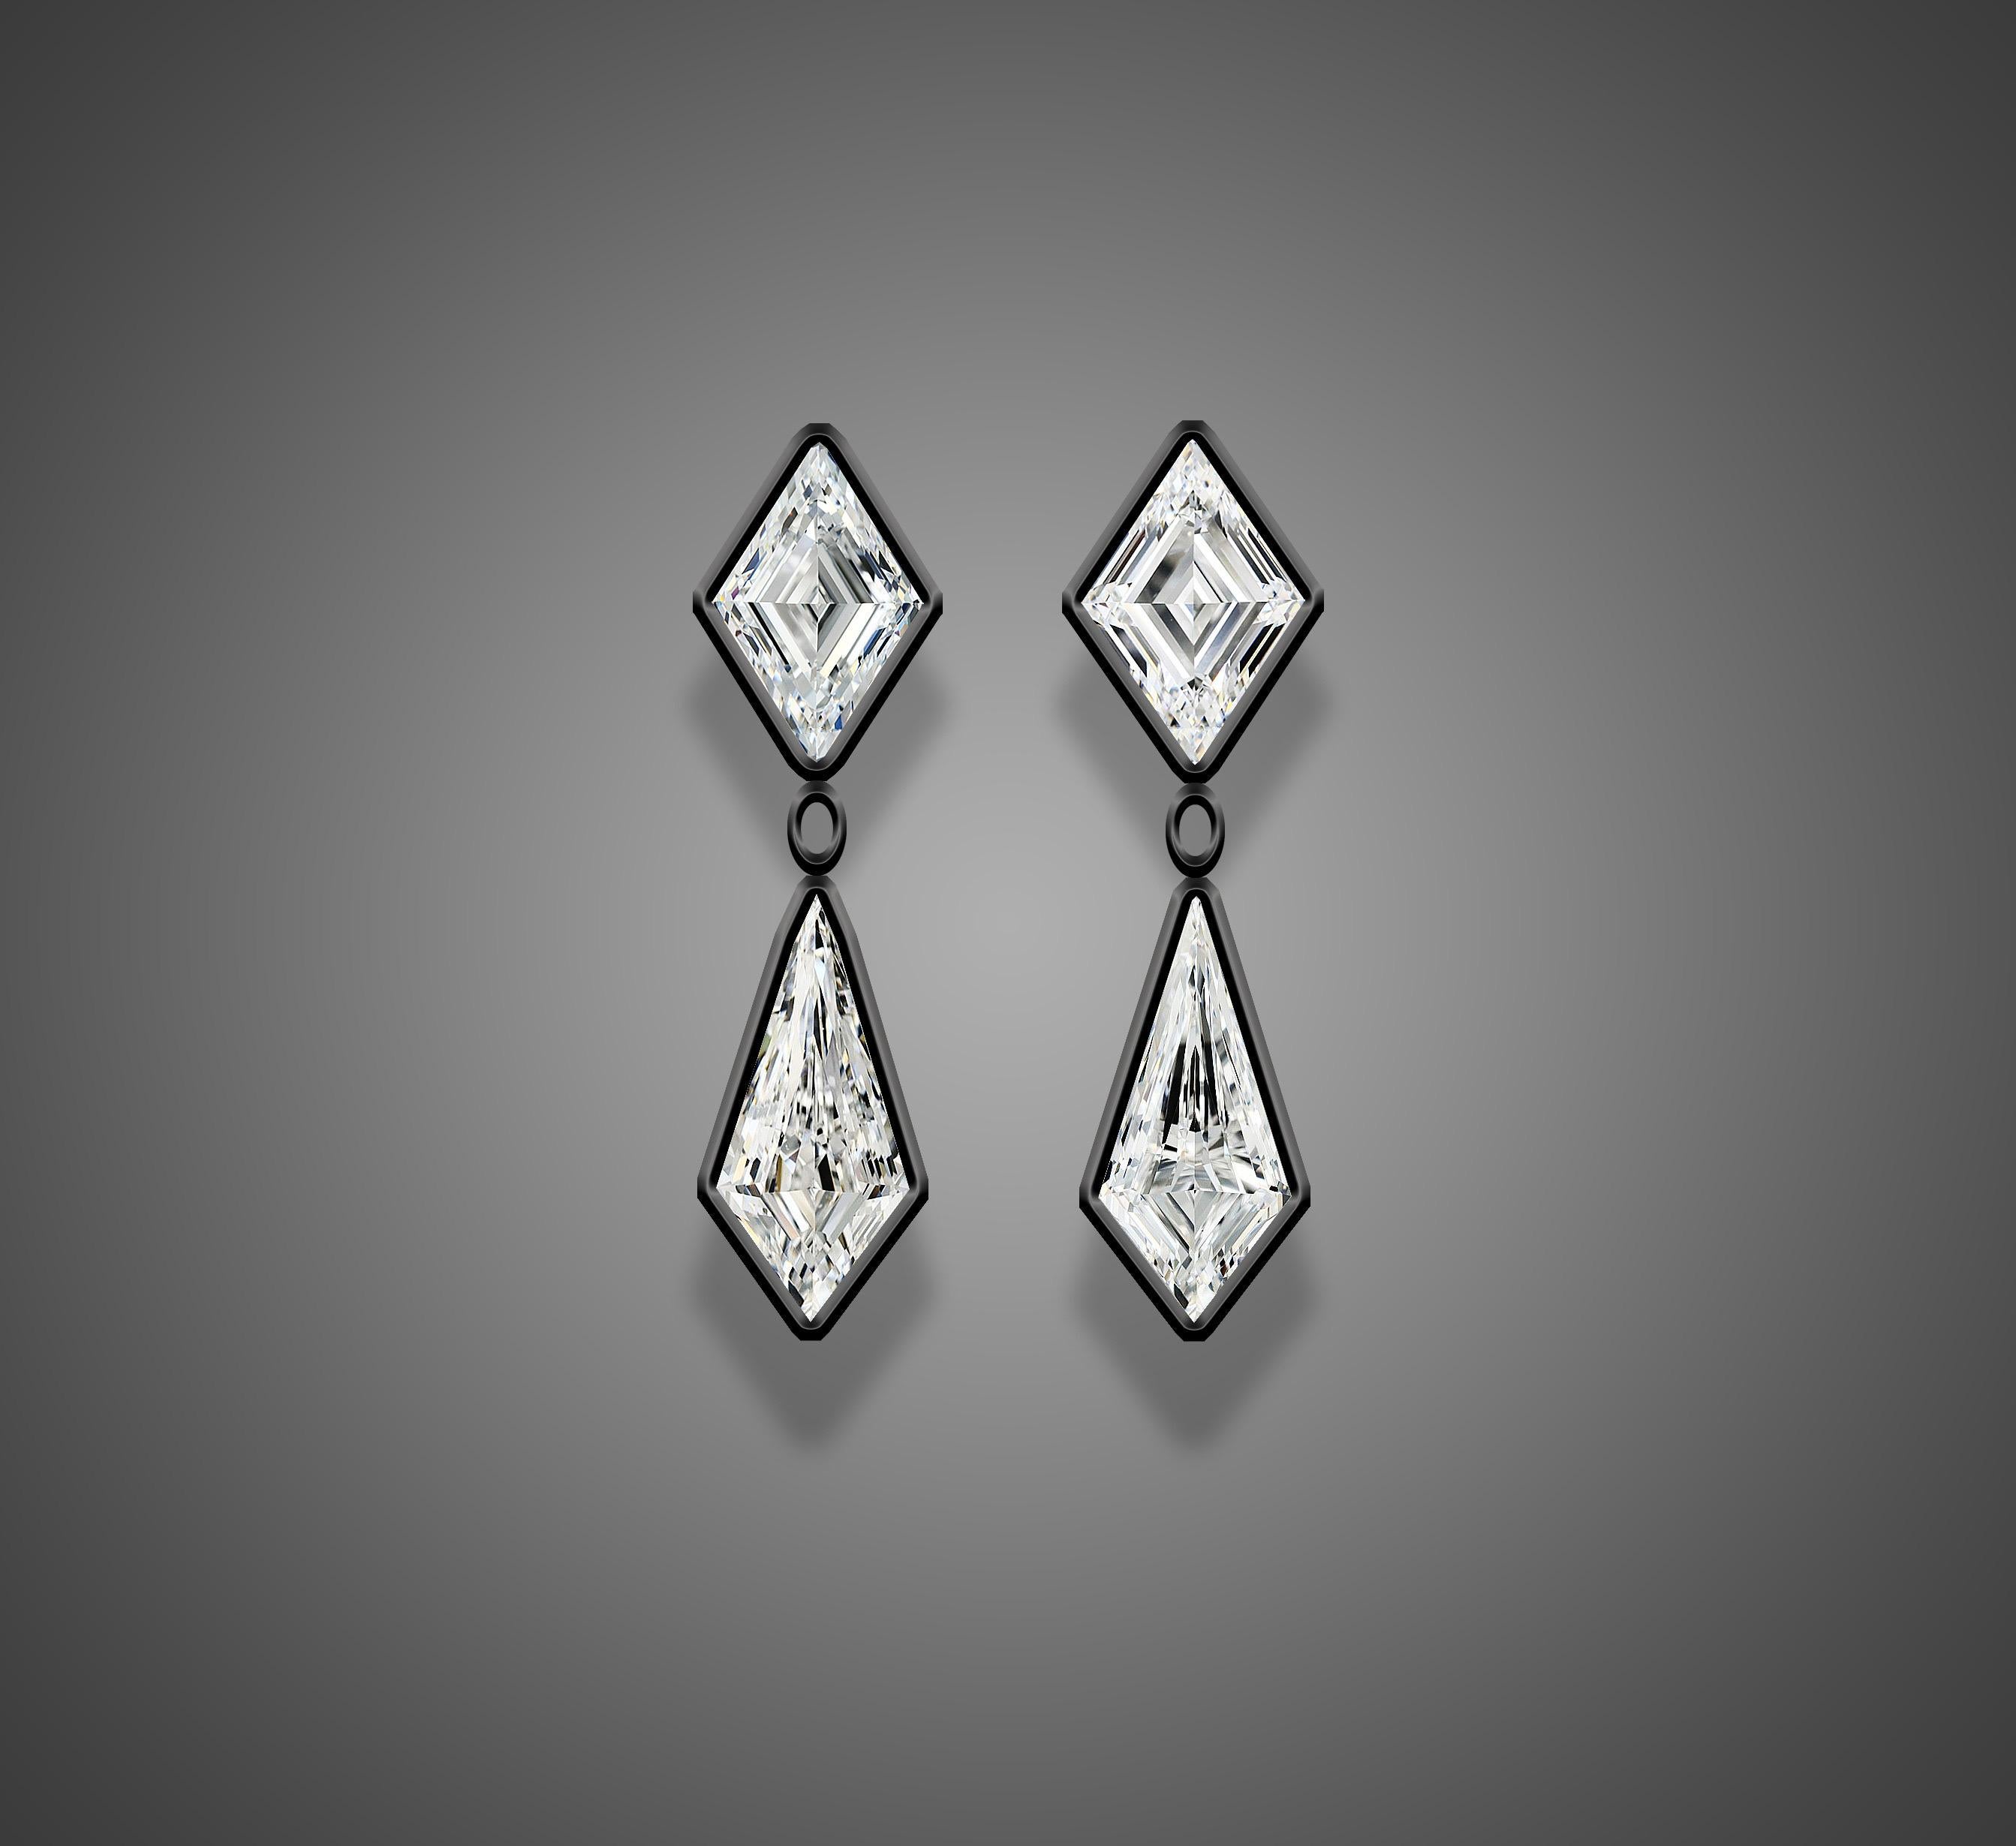 Diamond details are
LOZENGE DIAMOND
3.20ct / 2pcs
D / VS2
10.58-7.26x3.67mm
10.76-7.15x4.08mm
NON-FNT
GIA certified

KITE DIAMOND
3.01ct / 2pcs
D / VS1-VS2
13.62-6.11x3.65mm
13.64-6.17x3.47mm
NON-FNT
GIA certified
From Emilio Jewelry, a well known